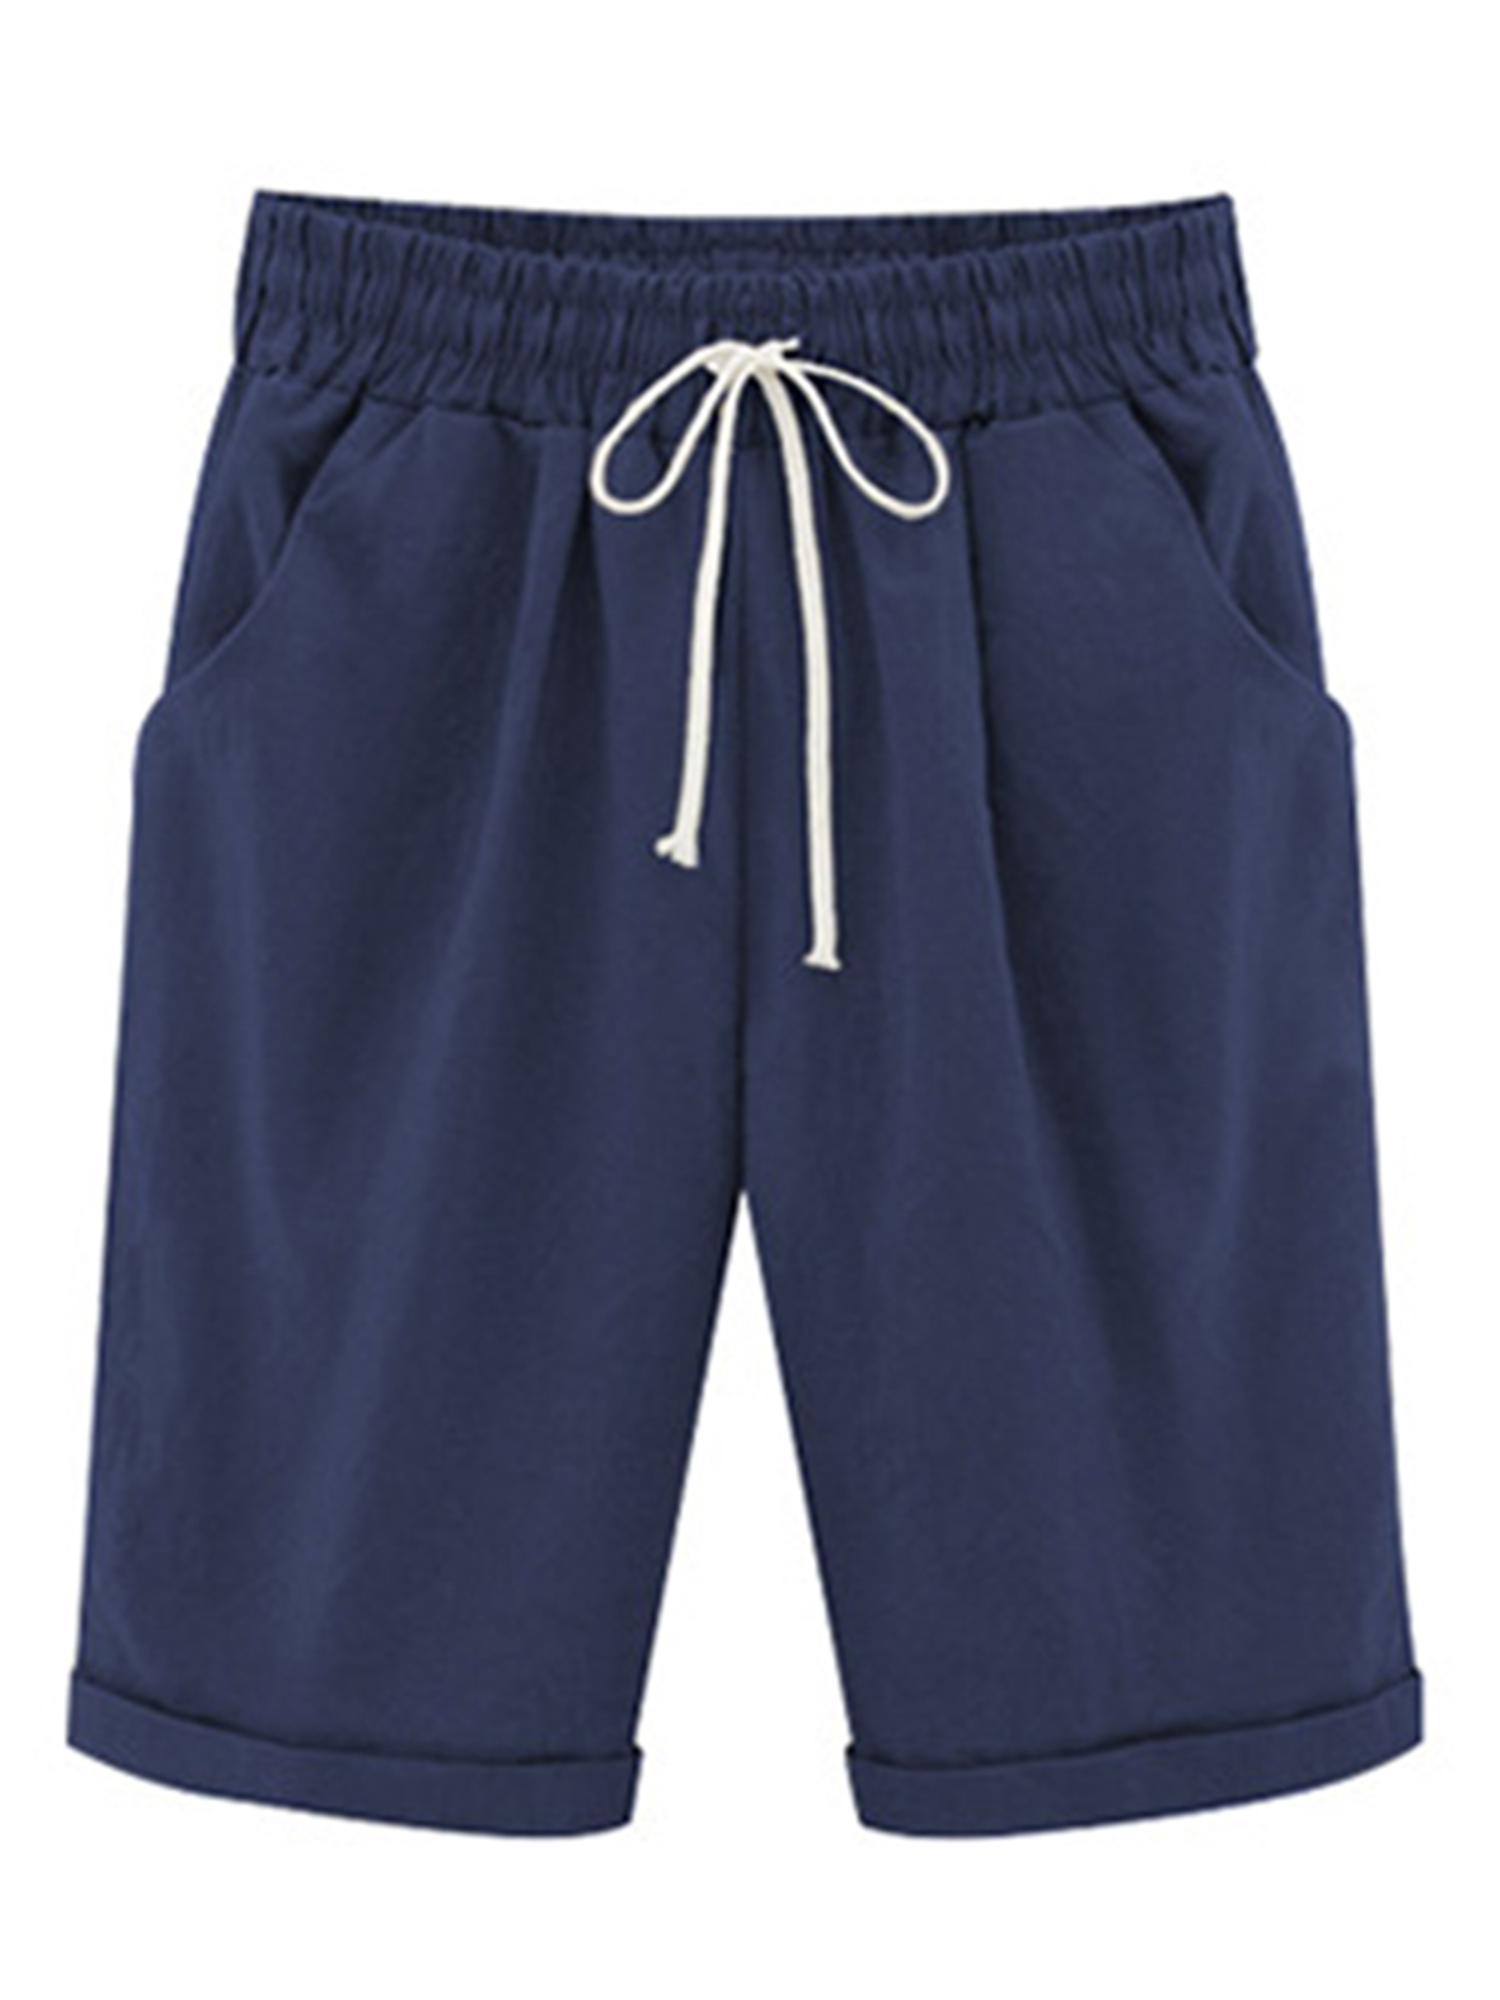 Niuer Women Summer Shorts Casual Lounge Wear Short Hot Pants Ladies Bermuda Shorts Ladies High Waist Beach Knee Length Pockets Short Trousers - image 1 of 5